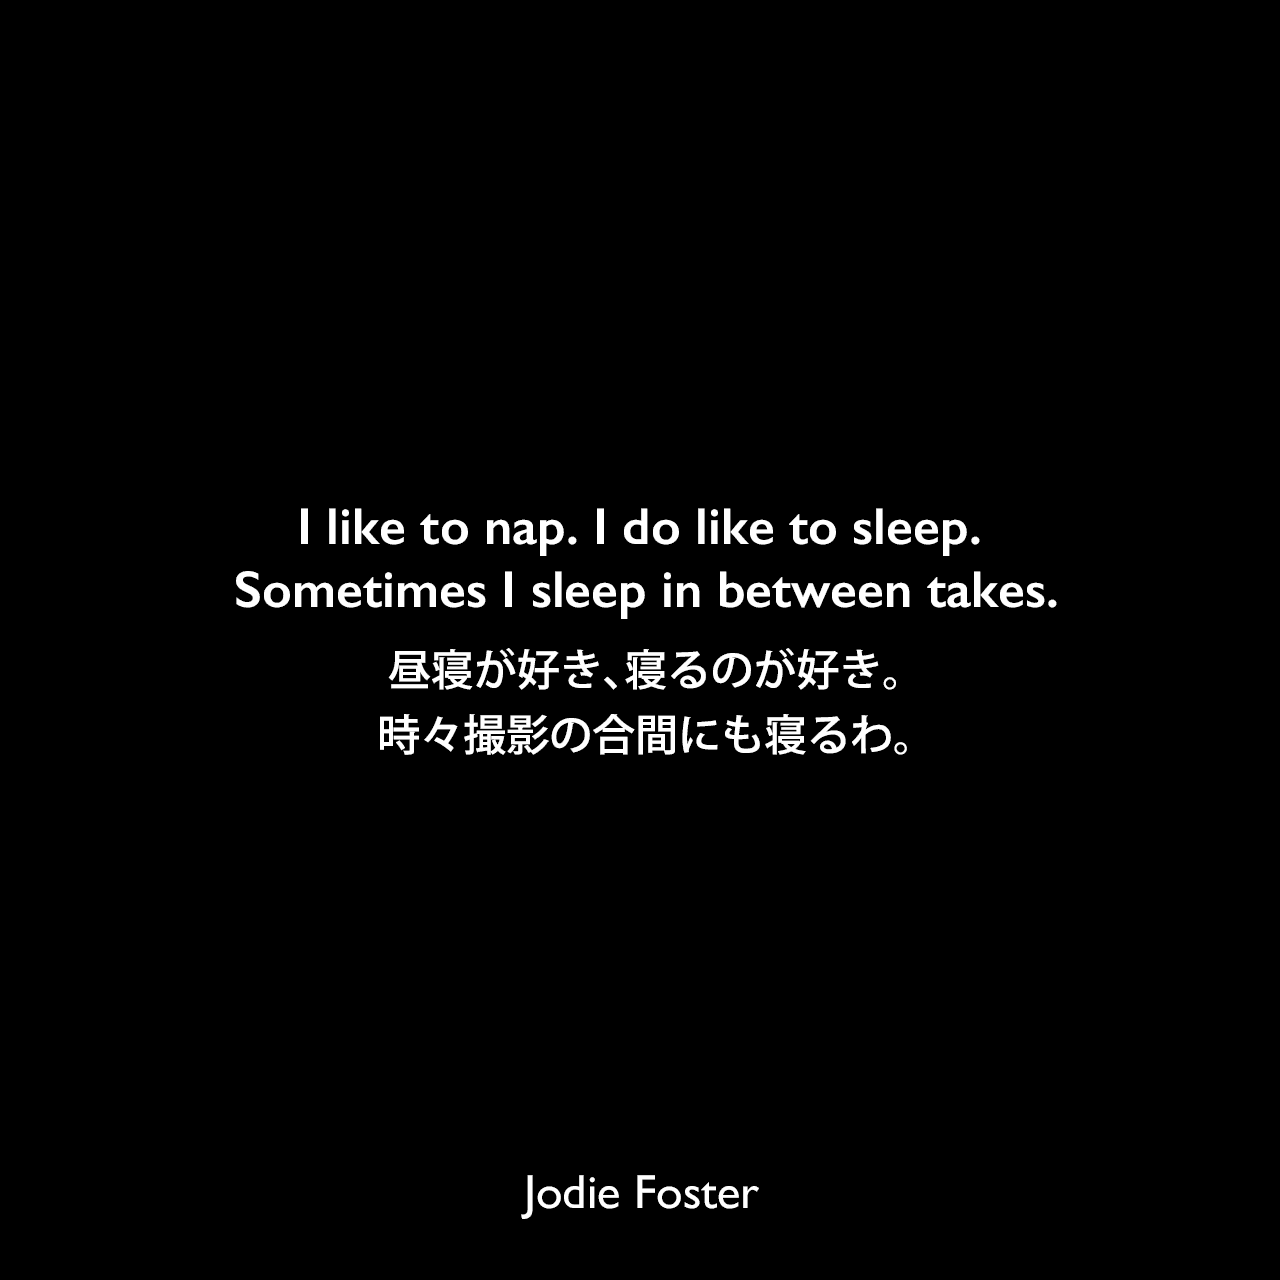 I like to nap. I do like to sleep. Sometimes I sleep in between takes.昼寝が好き、寝るのが好き。時々撮影の合間にも寝るわ。Jodie Foster